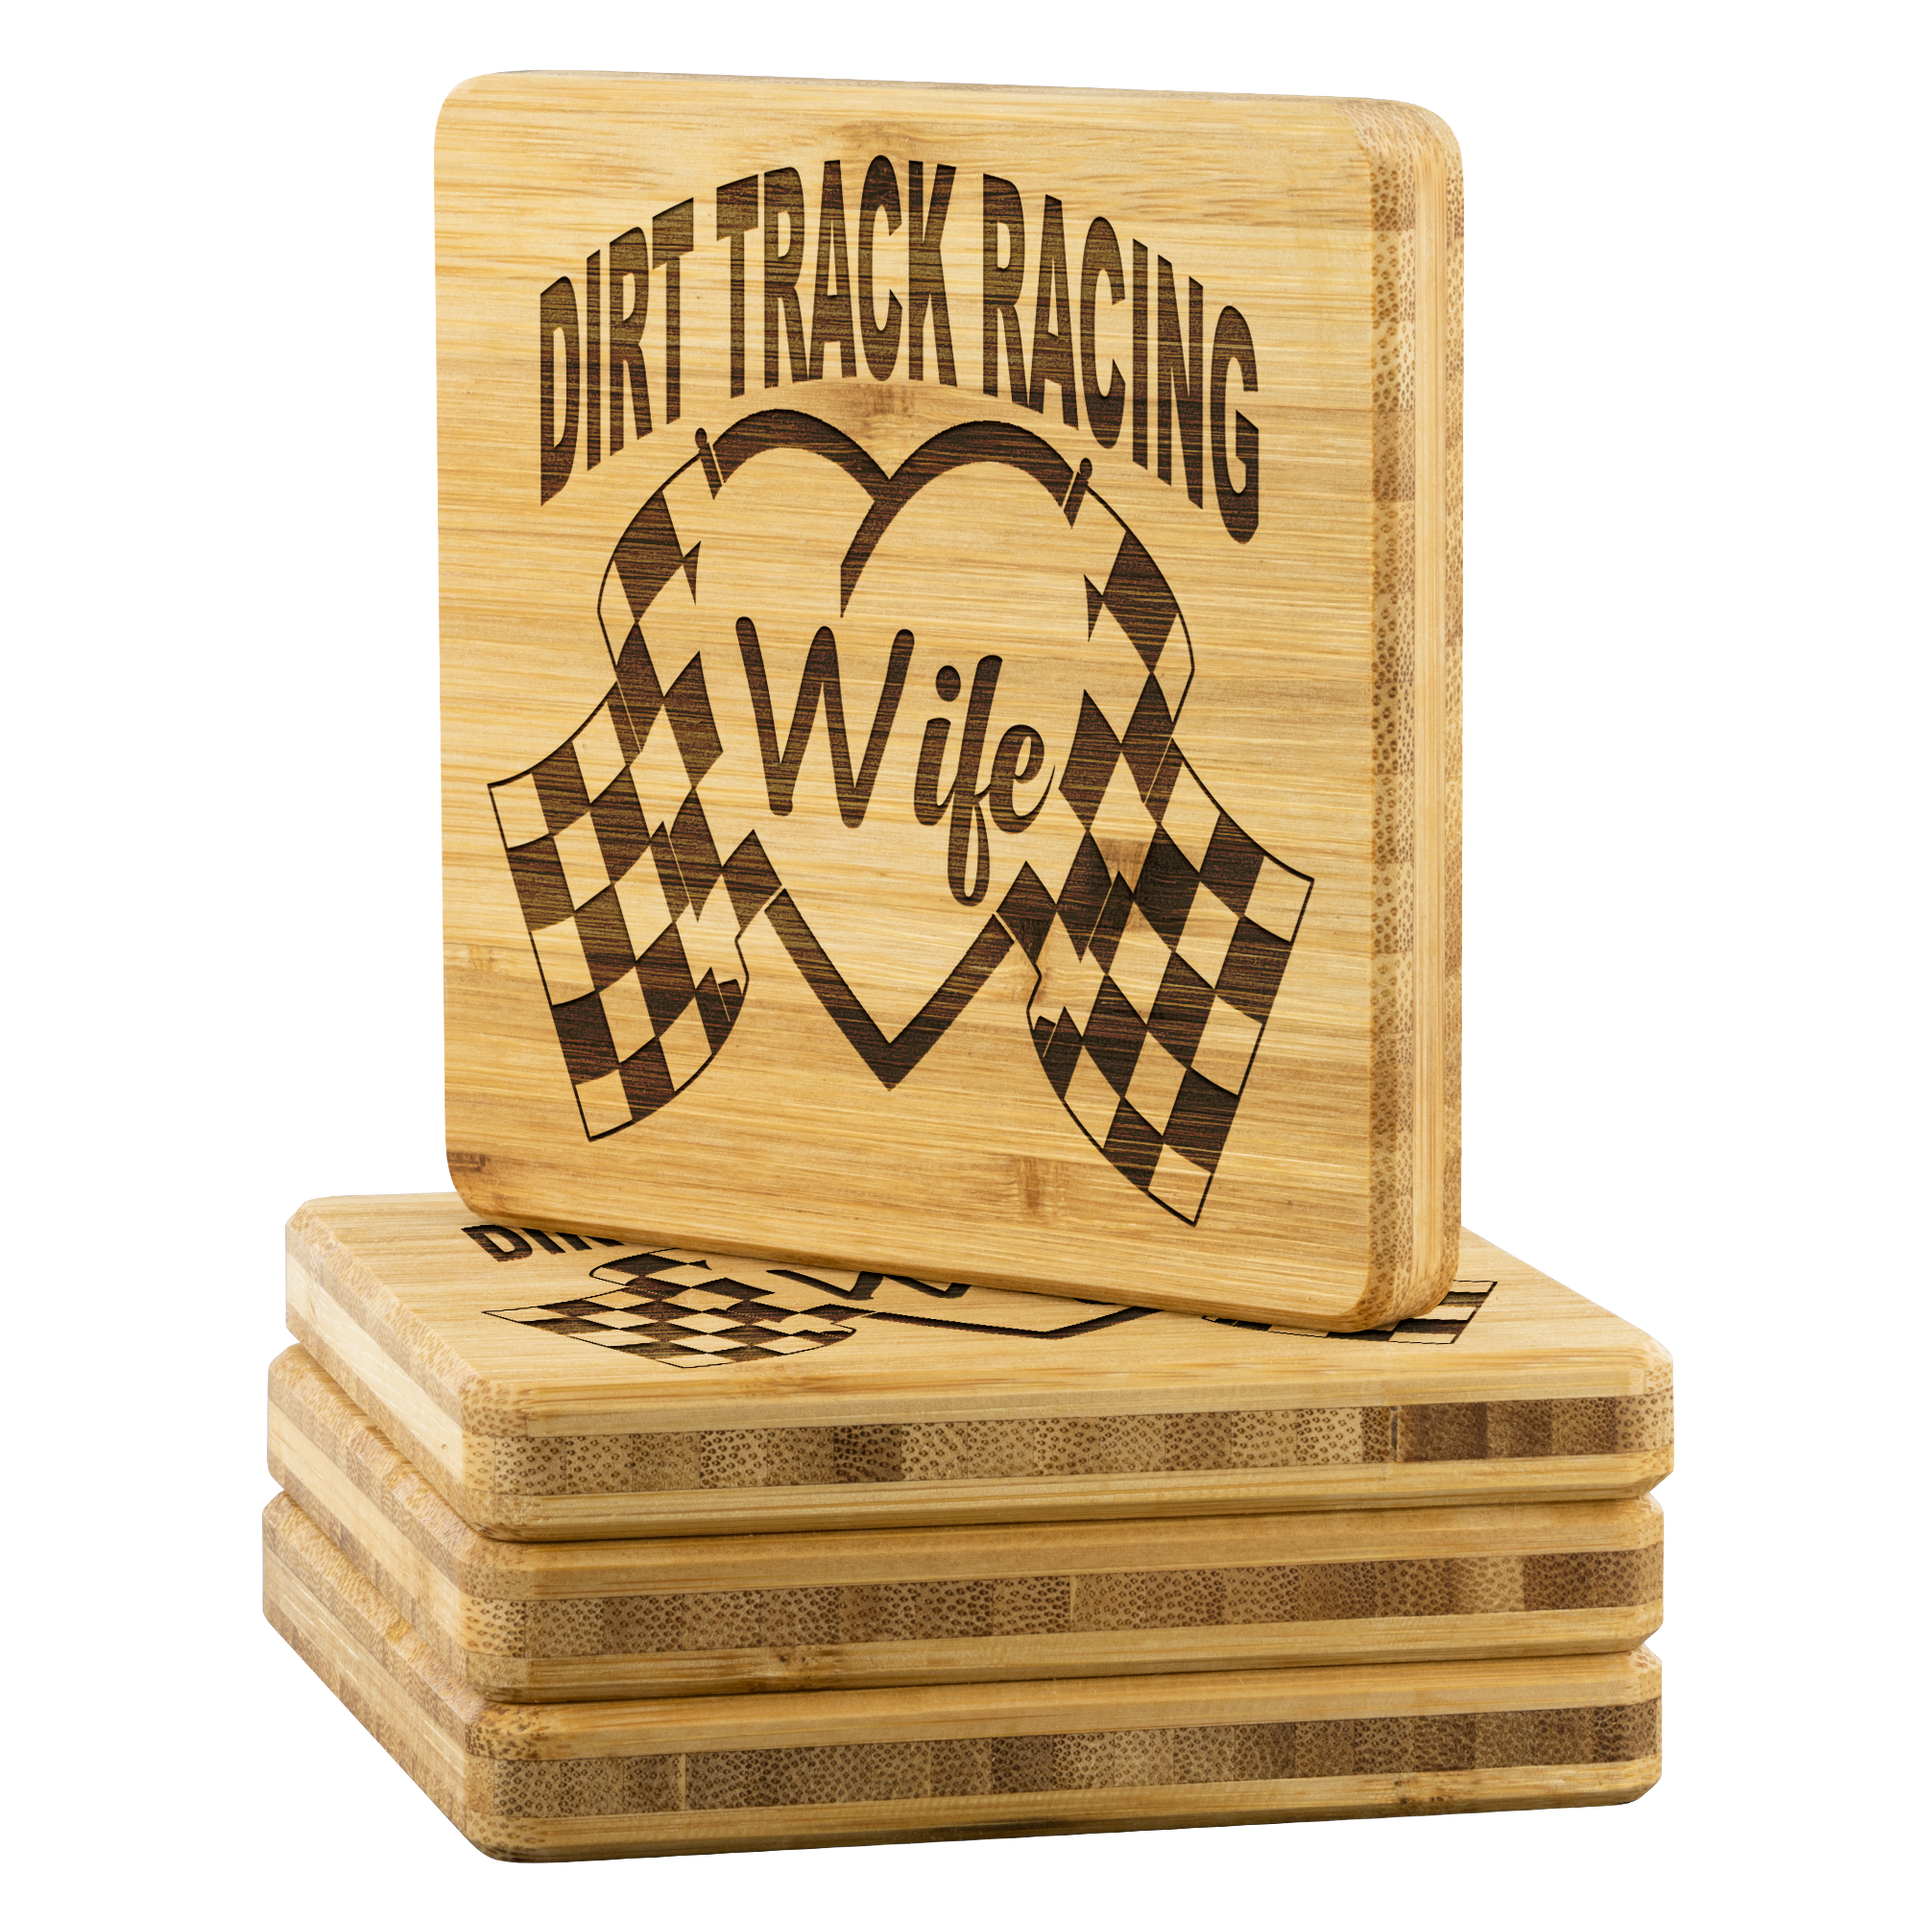 Dirt Track Racing Wife Bamboo Coaster